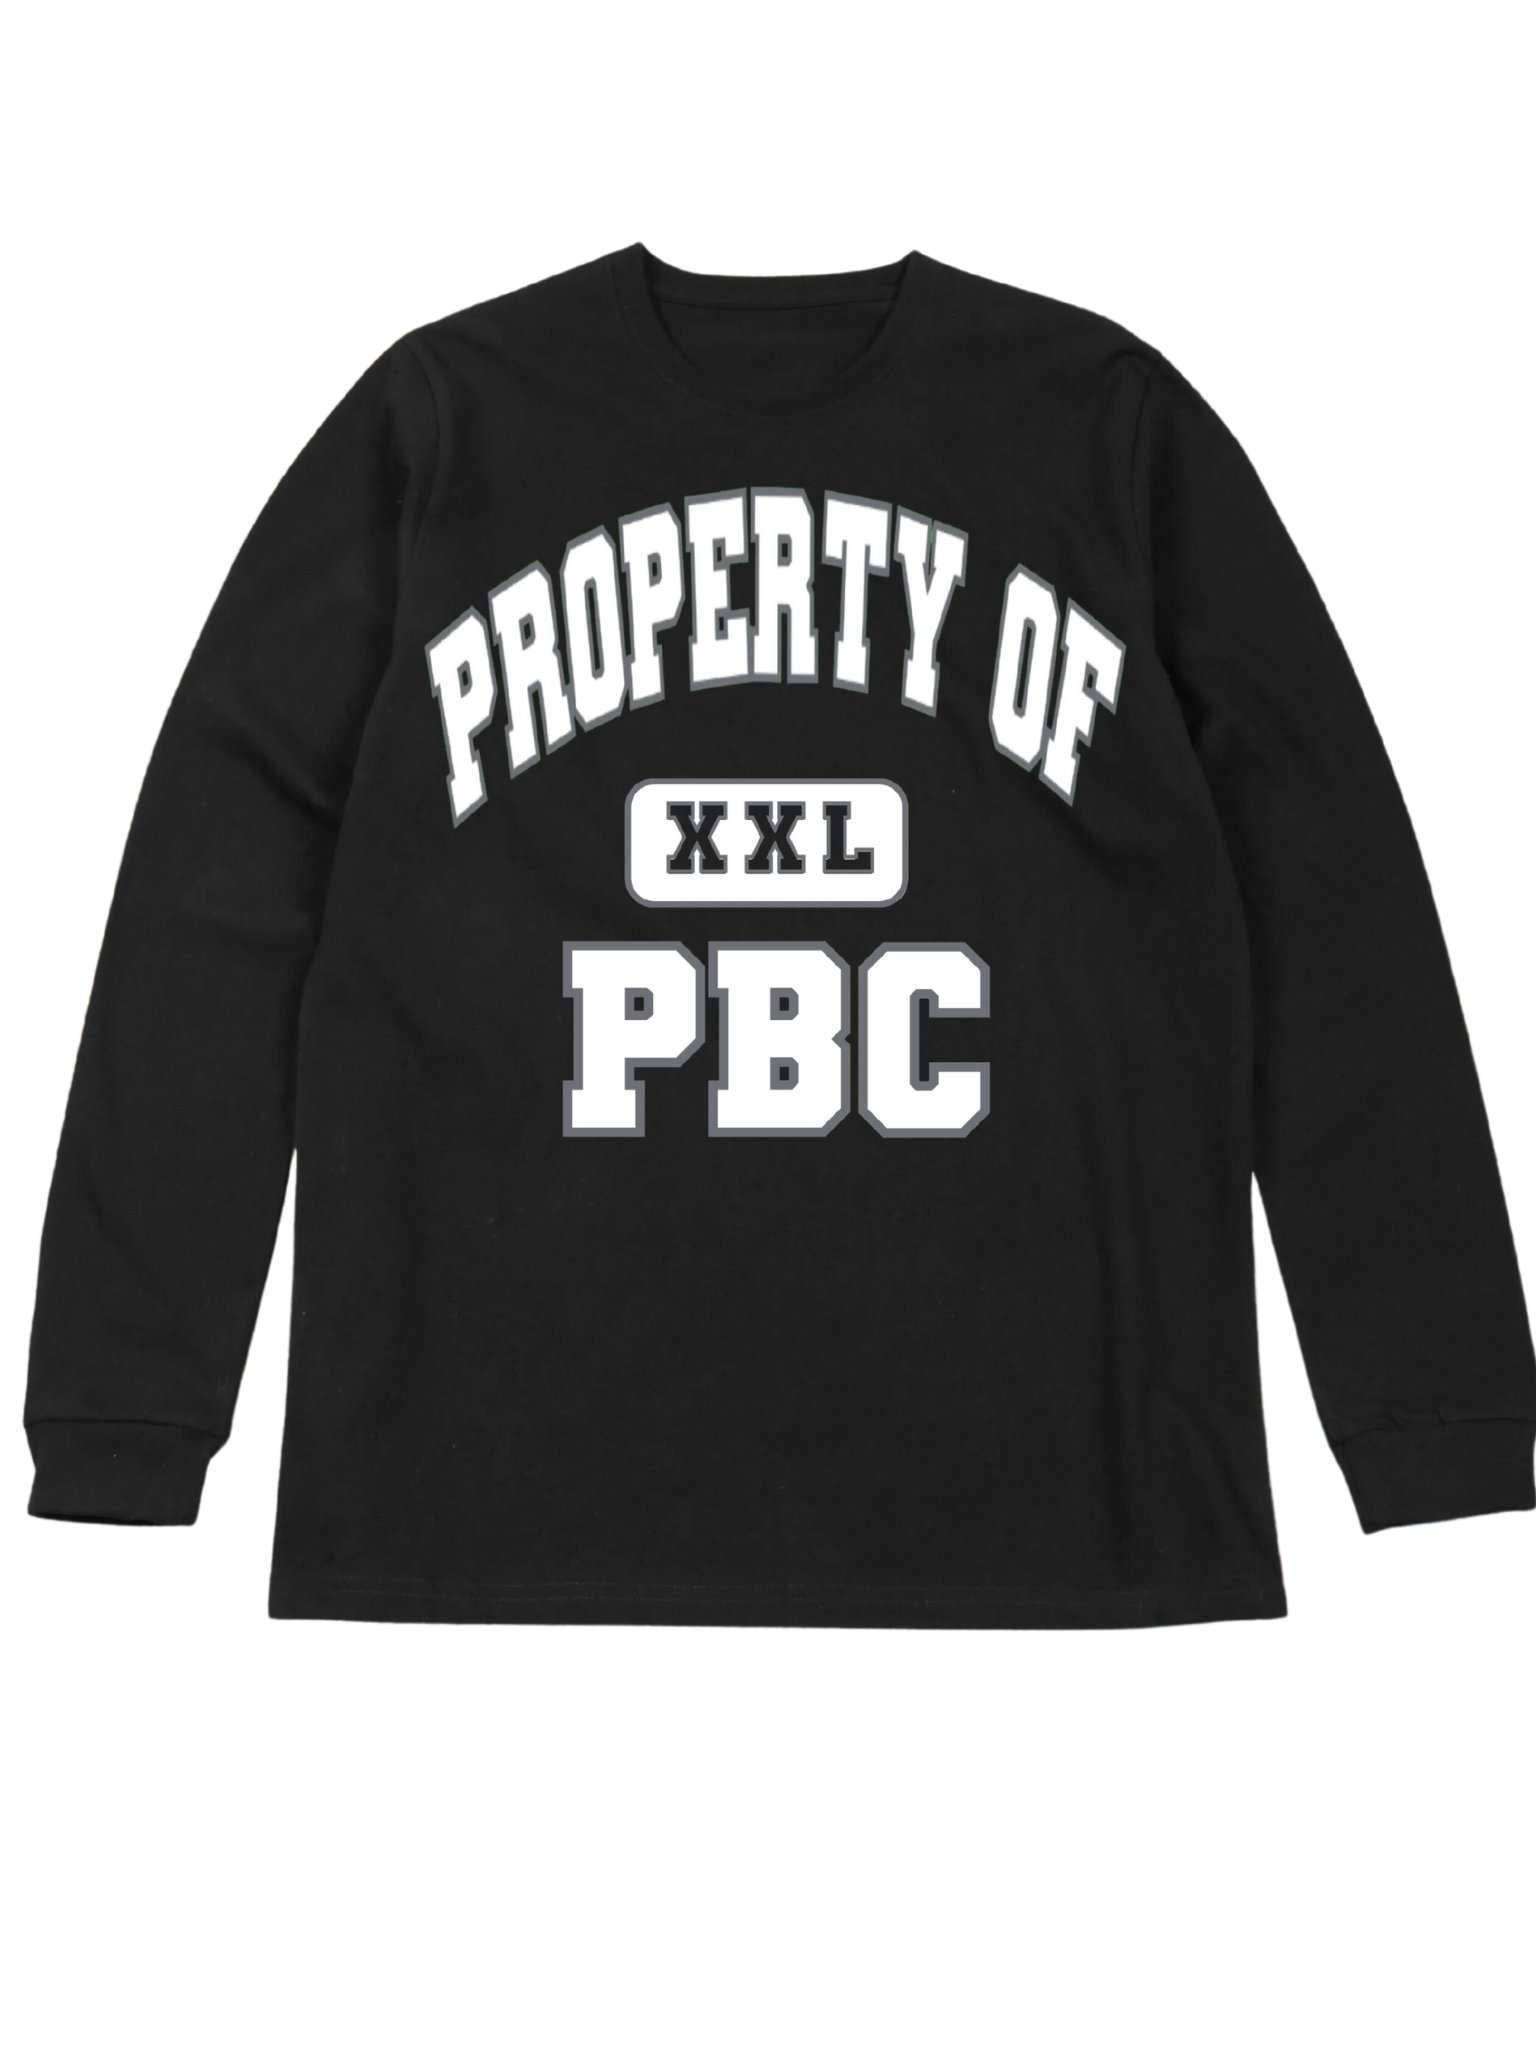 Property of PBC Longsleeve Tee (All colors)